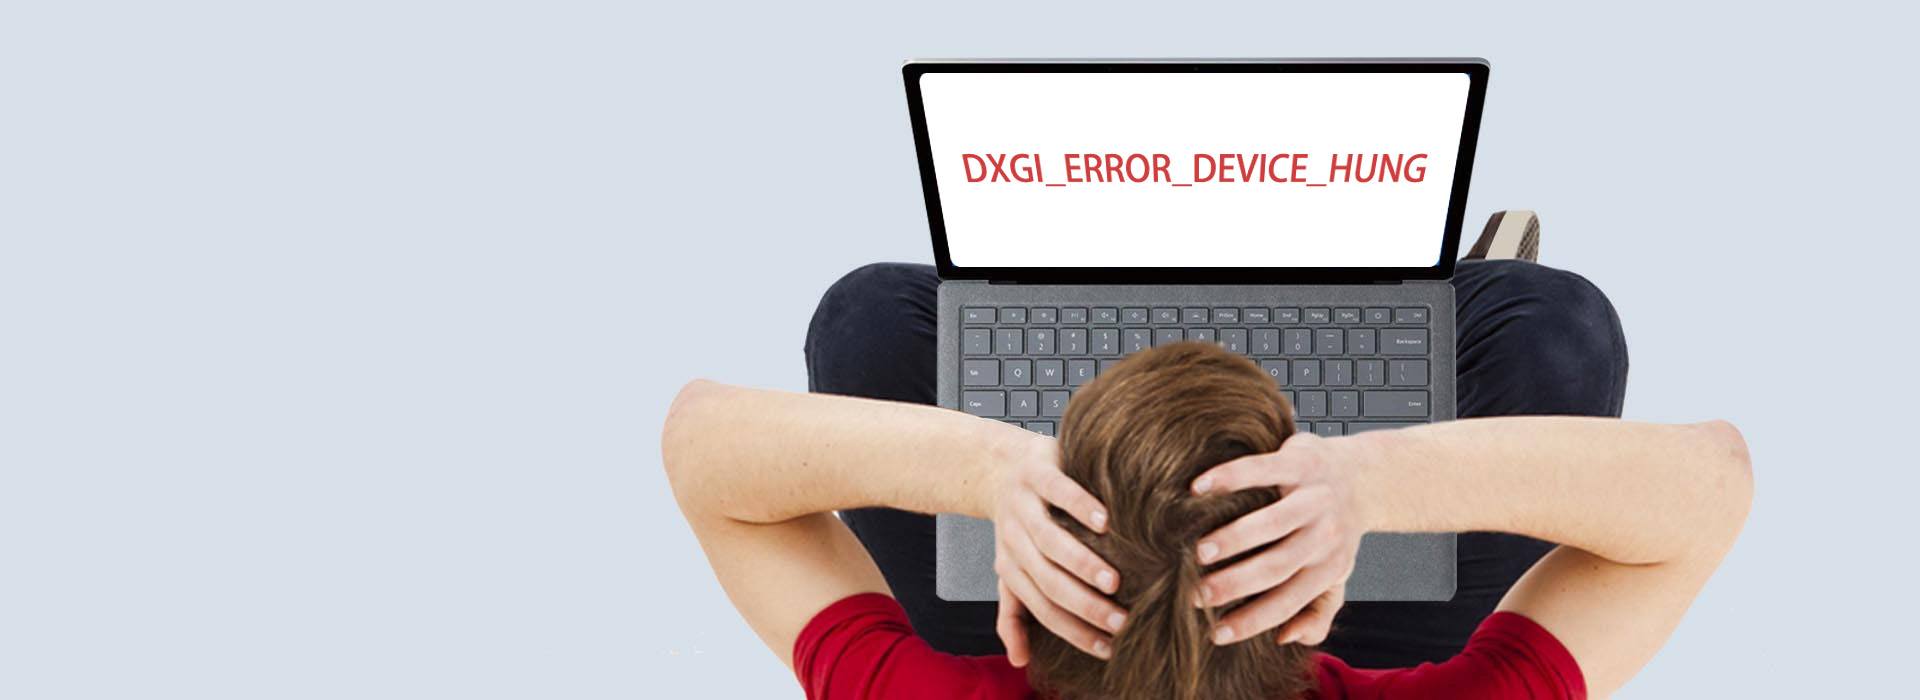 Gelost Dxgi Error Device Hung Schnelle Fehlerbehebung Driver Easy